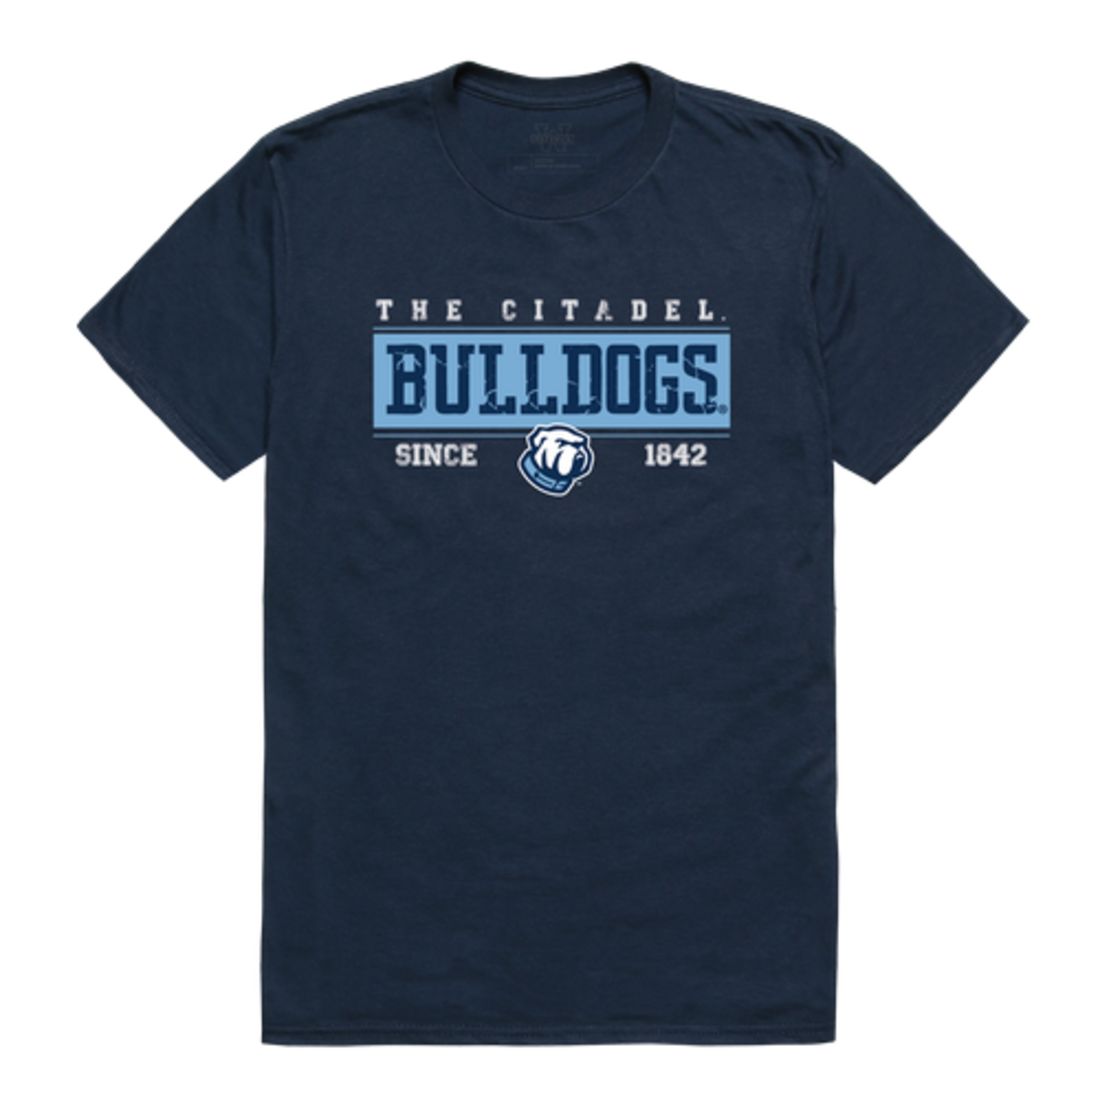 The Citadel Bulldogs Established T-Shirt